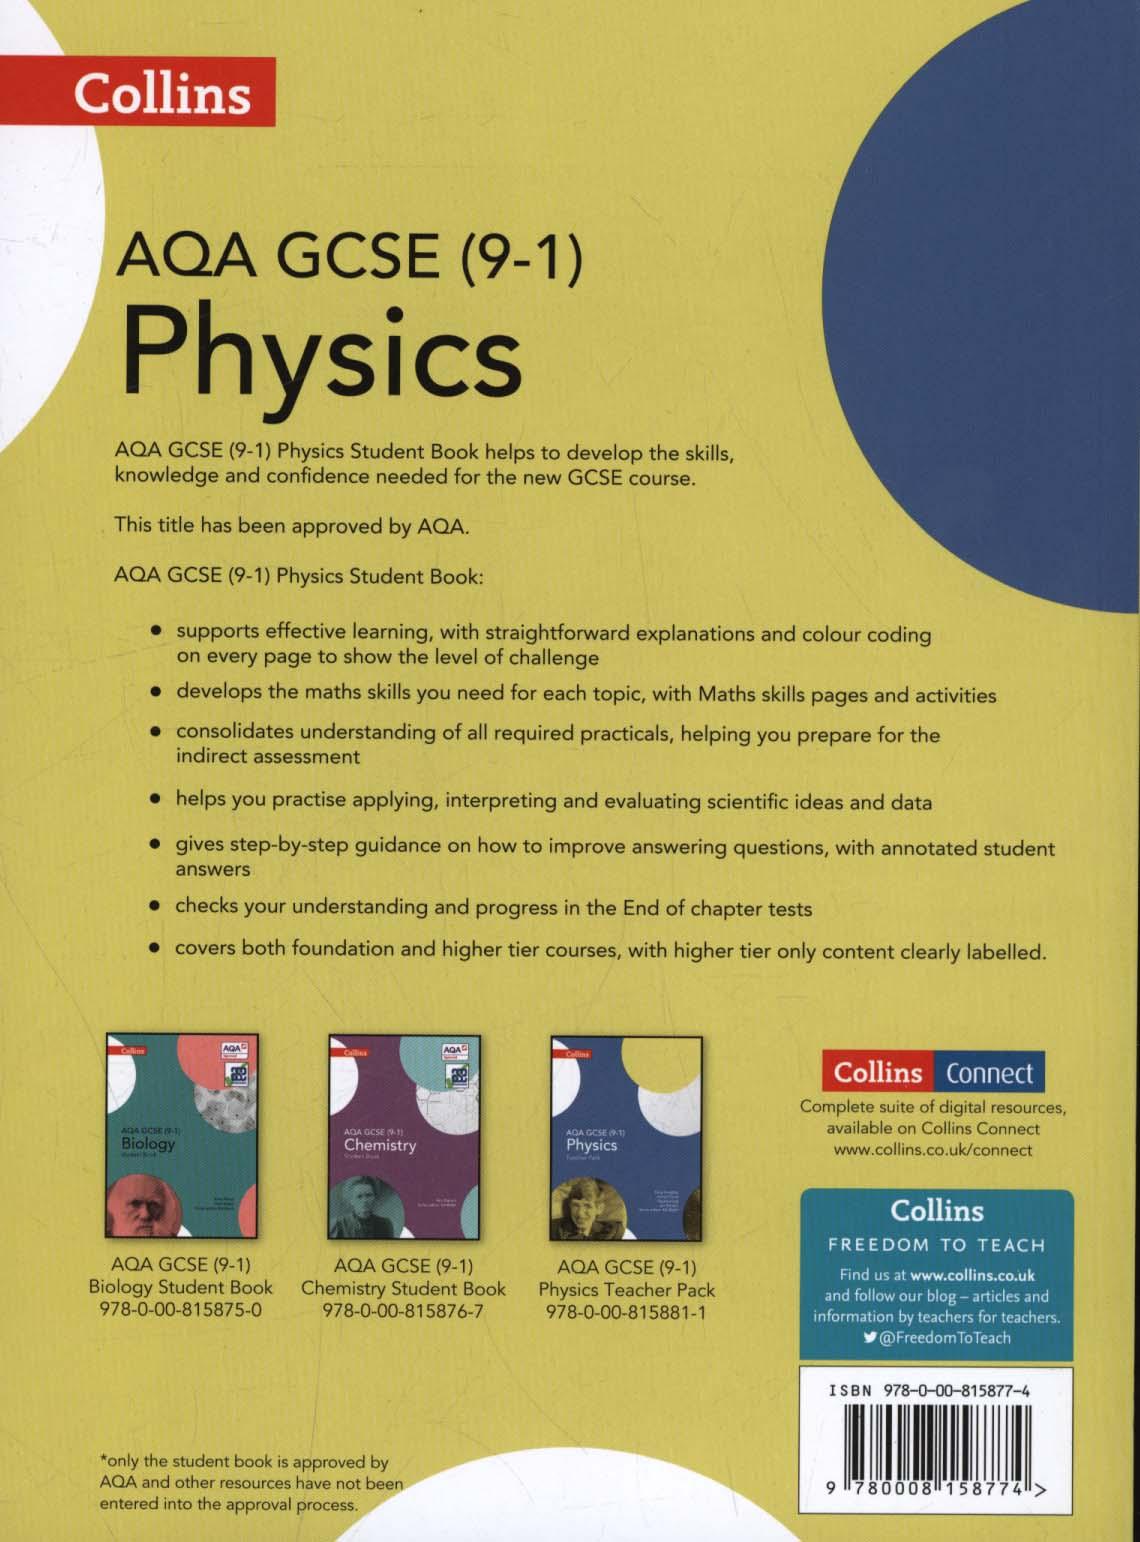 AQA GCSE (9-1) Physics